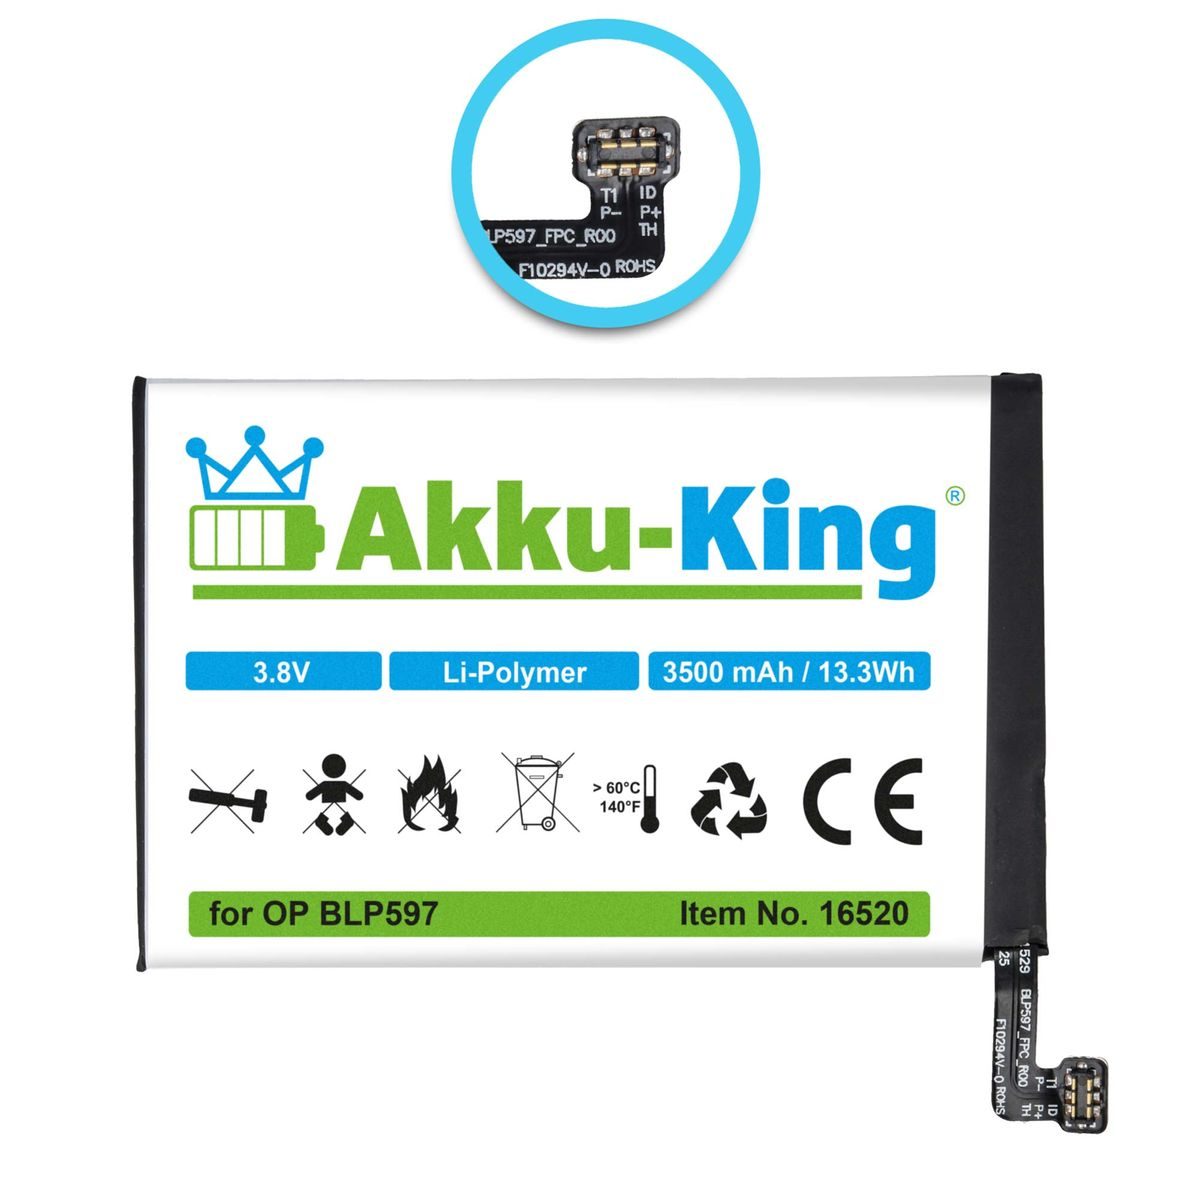 AKKU-KING Akku BLP597 Handy-Akku, 3500mAh kompatibel Volt, mit OnePlus 3.8 Li-Polymer